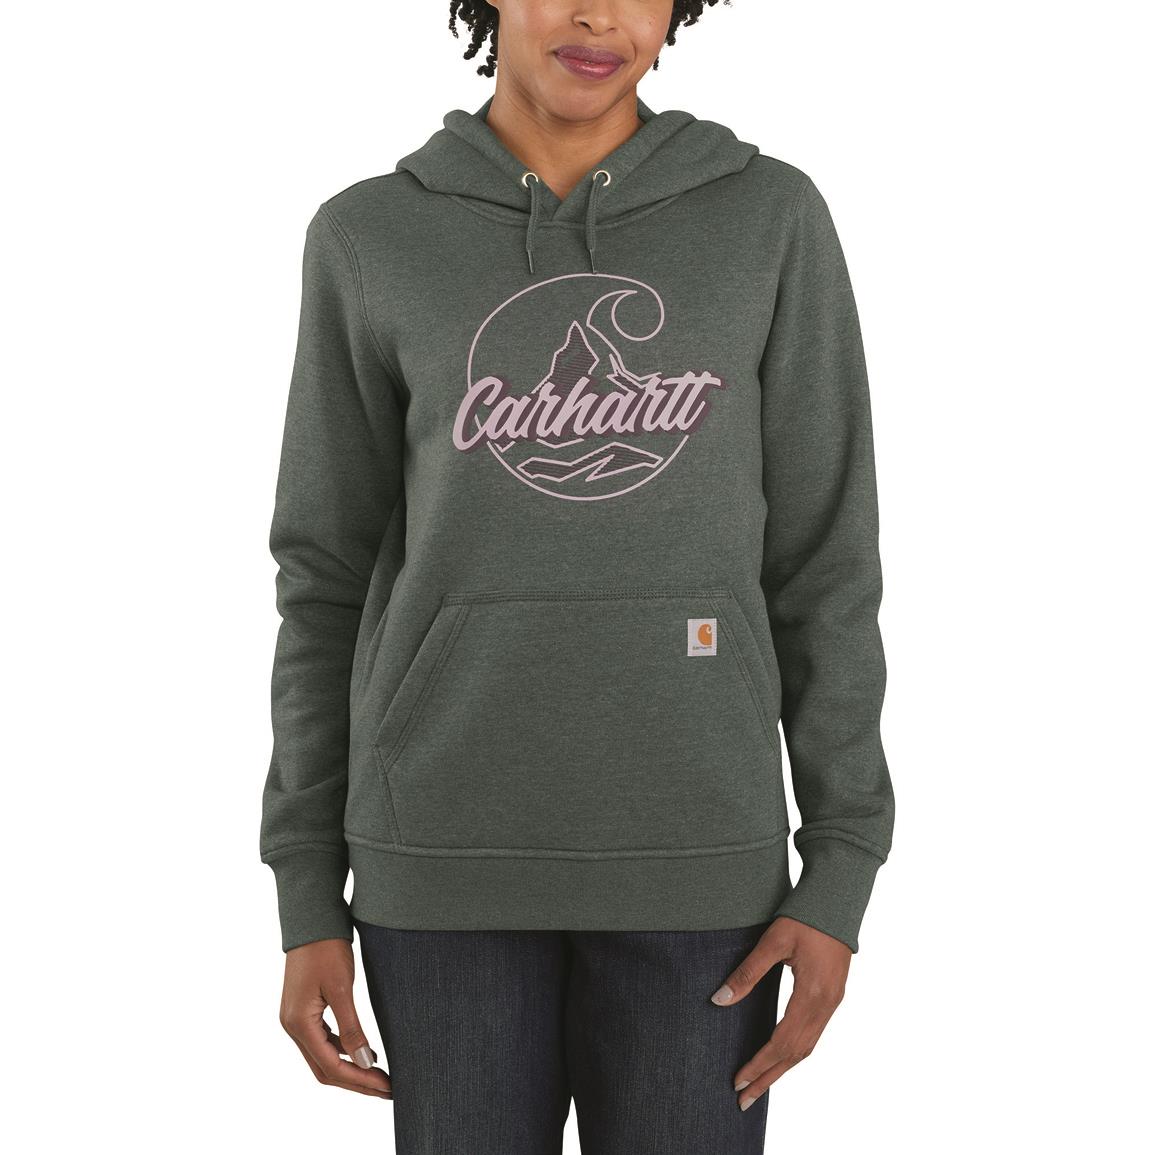 Carhartt Women's C Logo Graphic Hoodie, Elm Heather